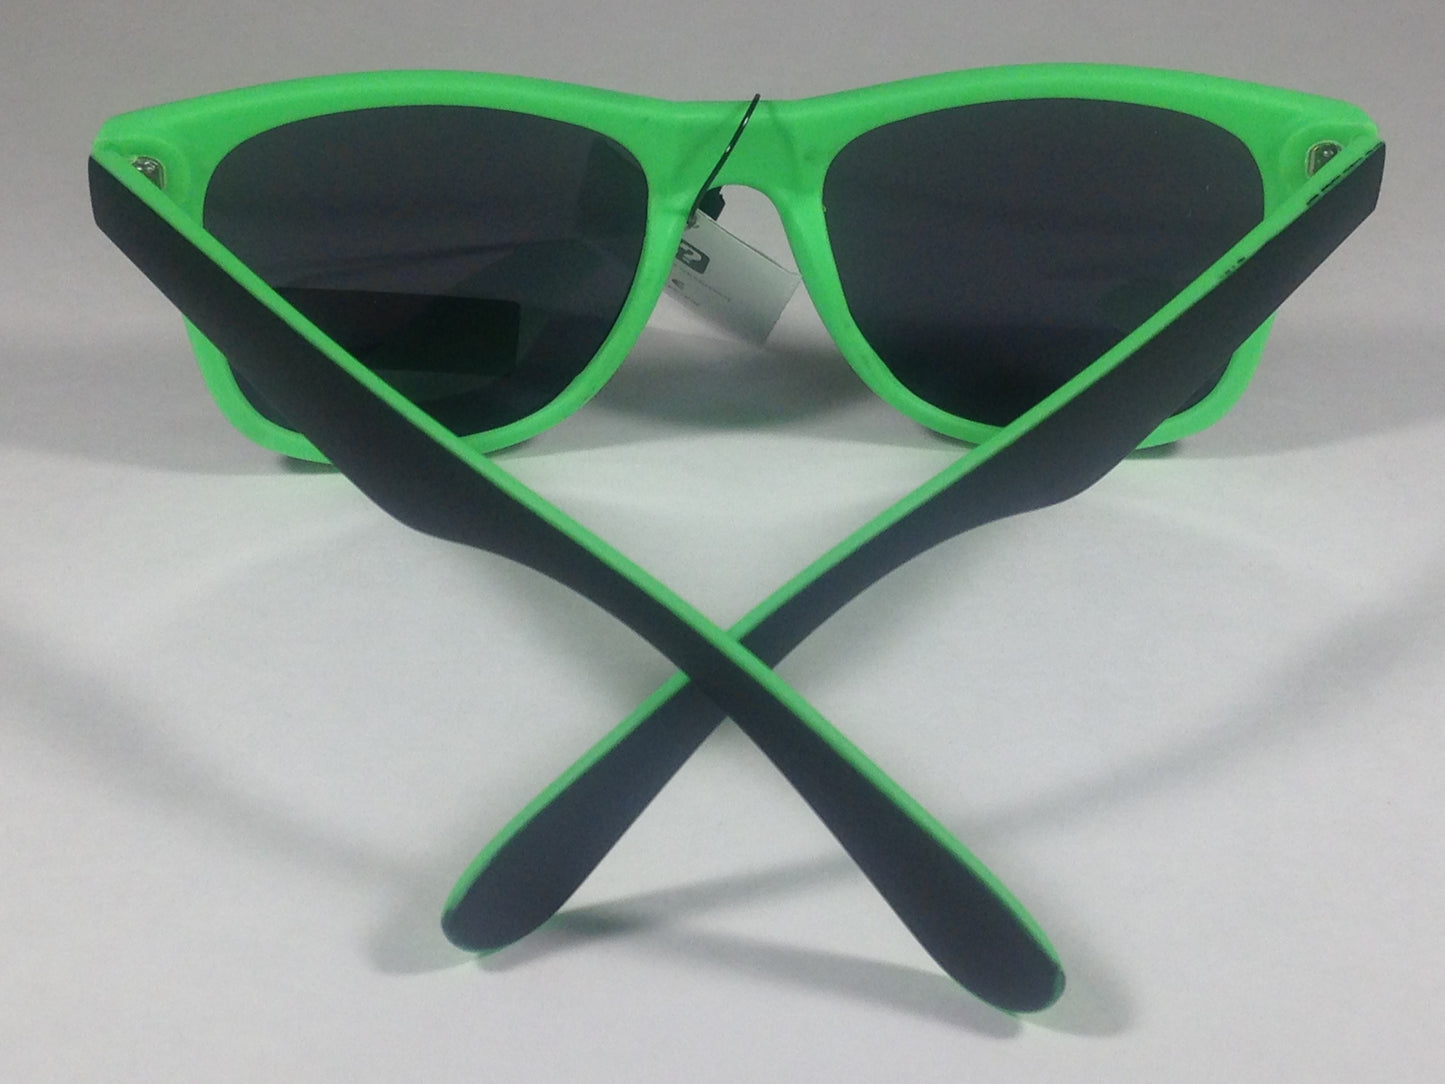 Hd Polarized Sunglasses Pz-Wf04-2Tst Two Tone Wf Man Girl Multiple Color Matte Rubber Finish - Sunglasses